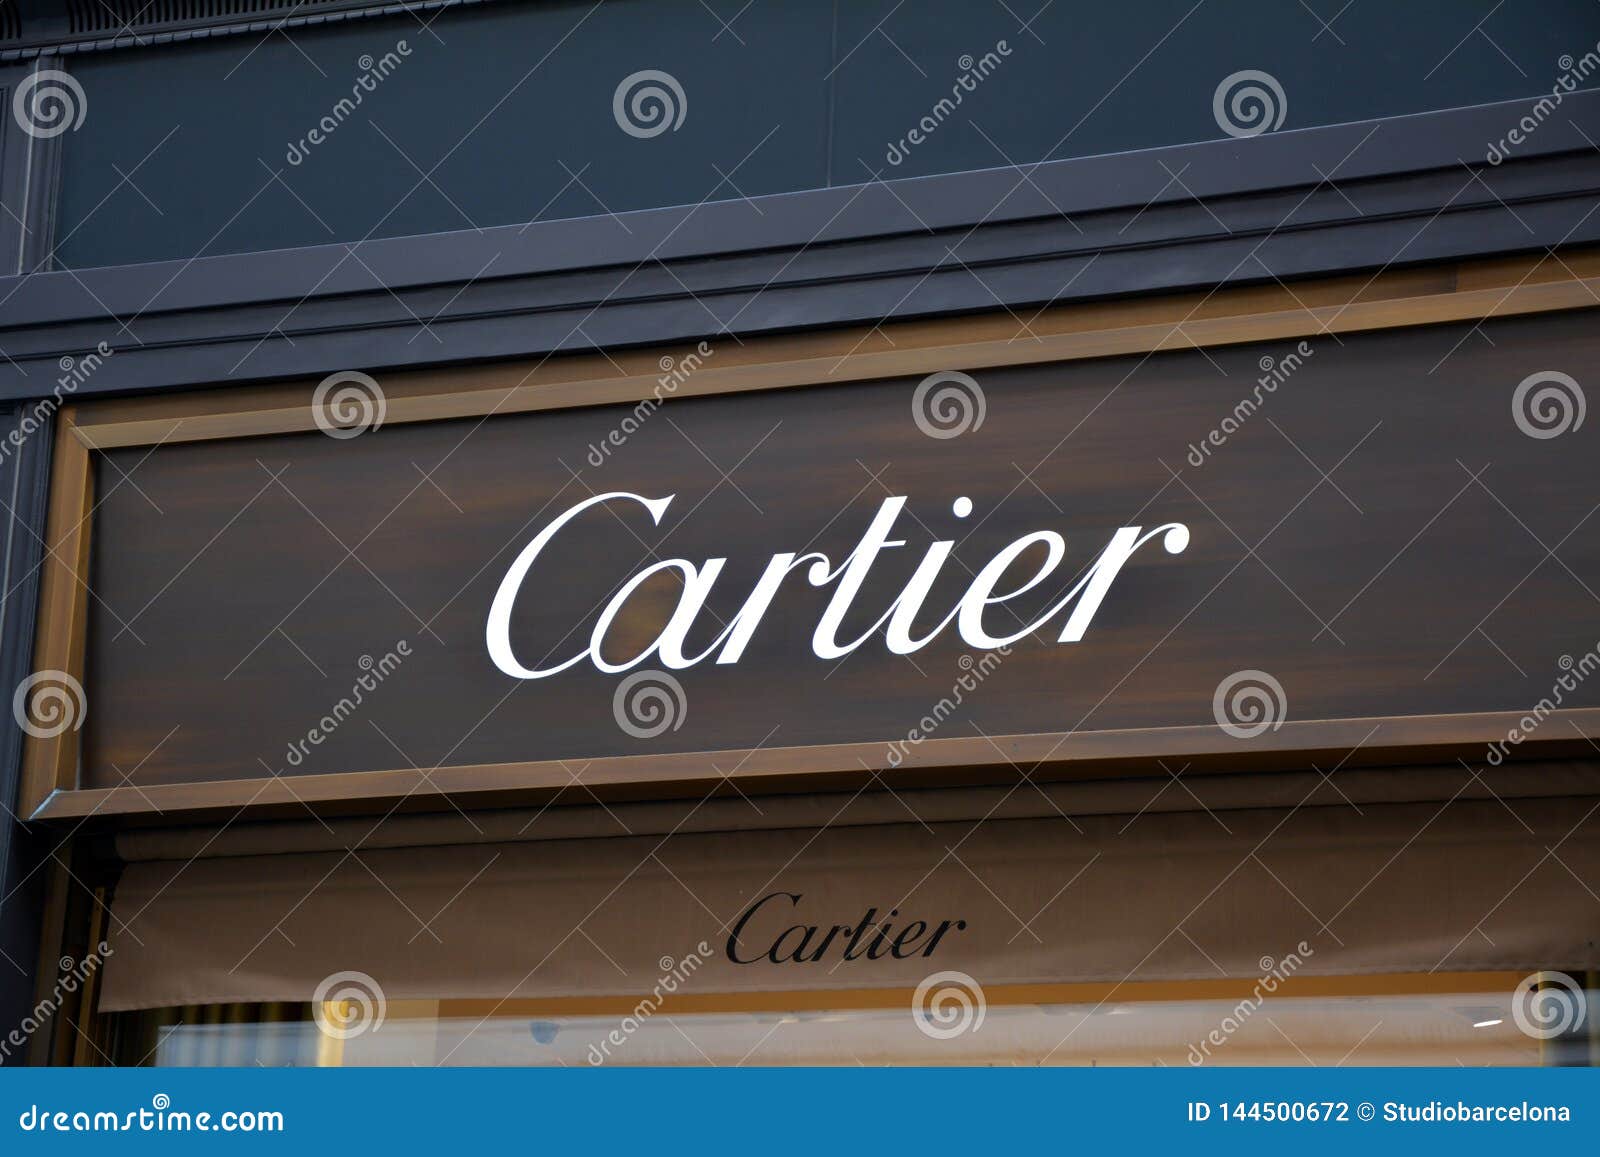 cartier shop vienna